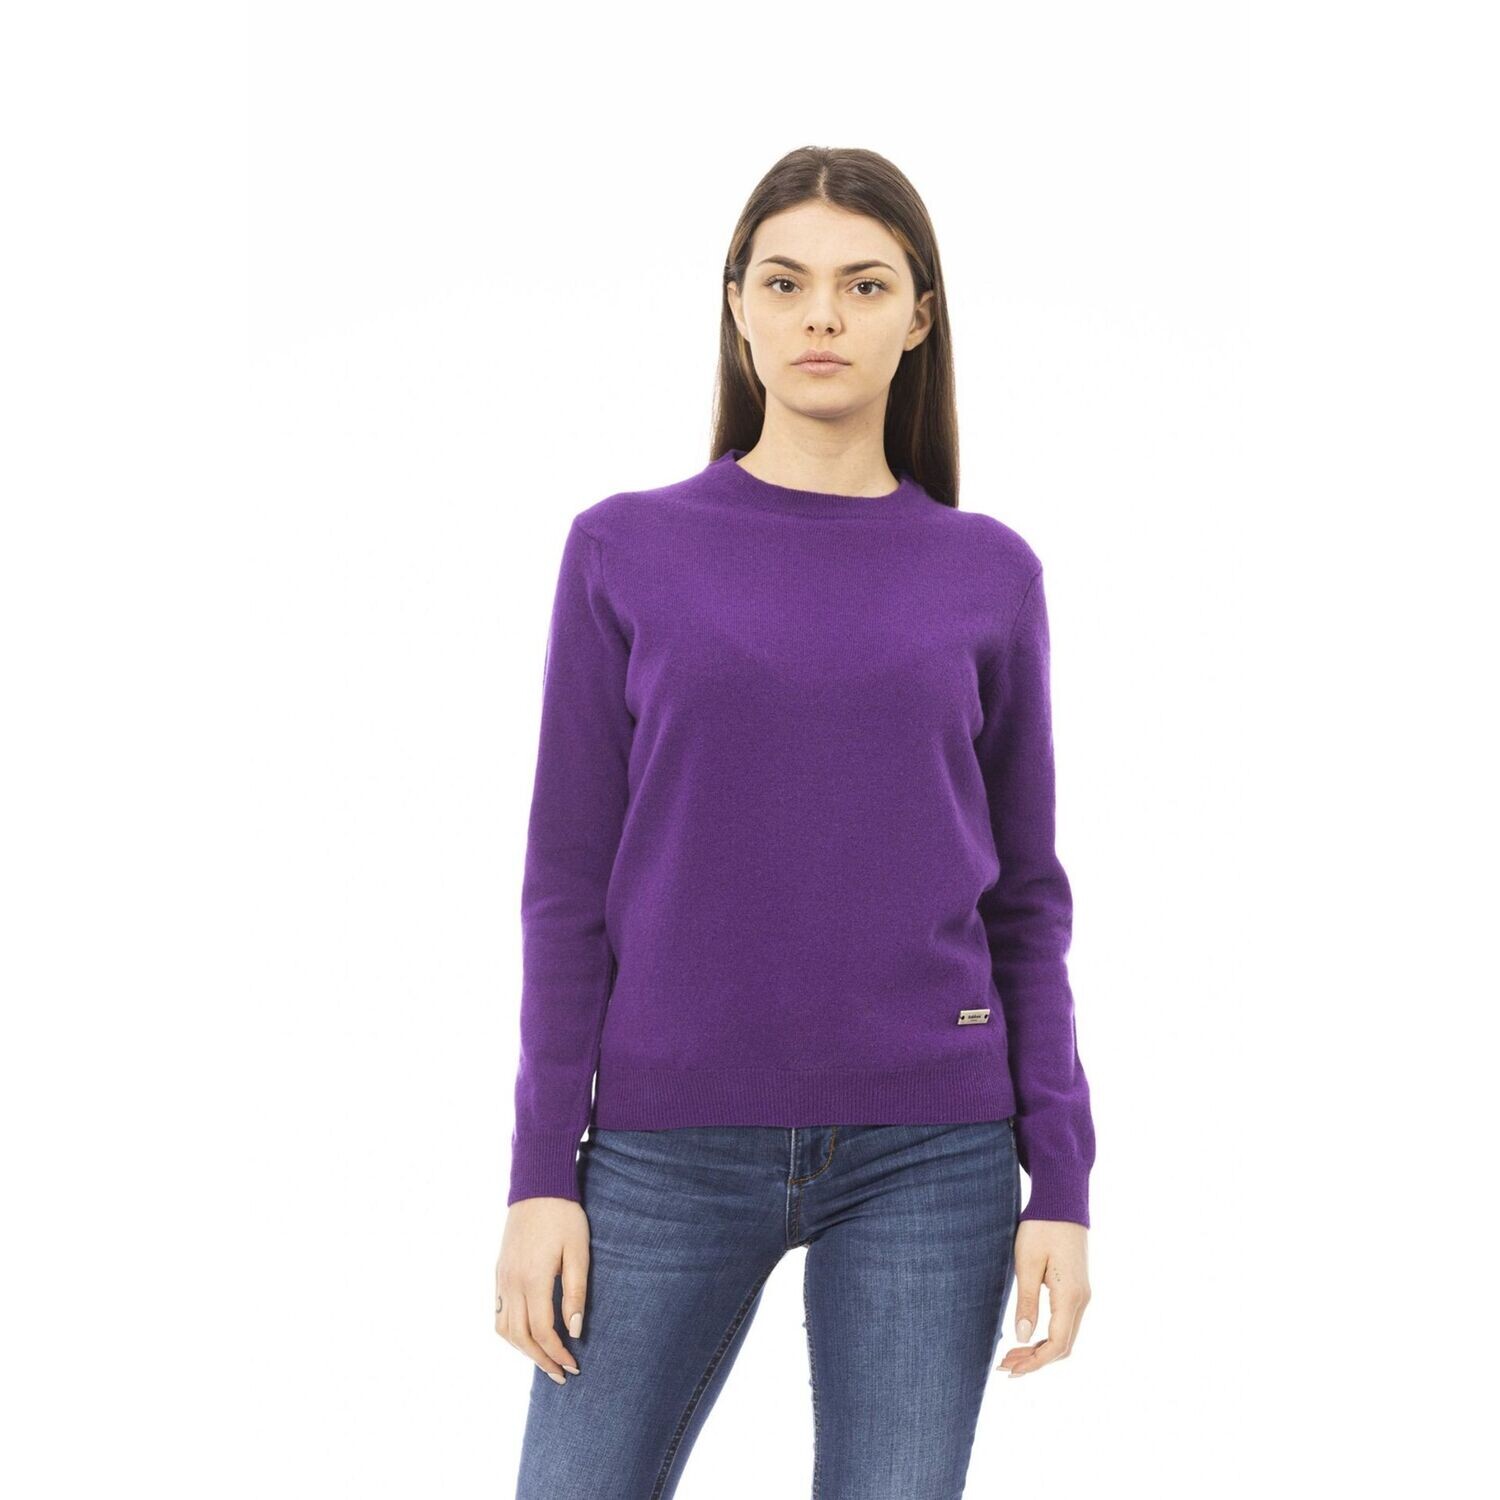 Baldinini Trend Purple Sweater, size: S